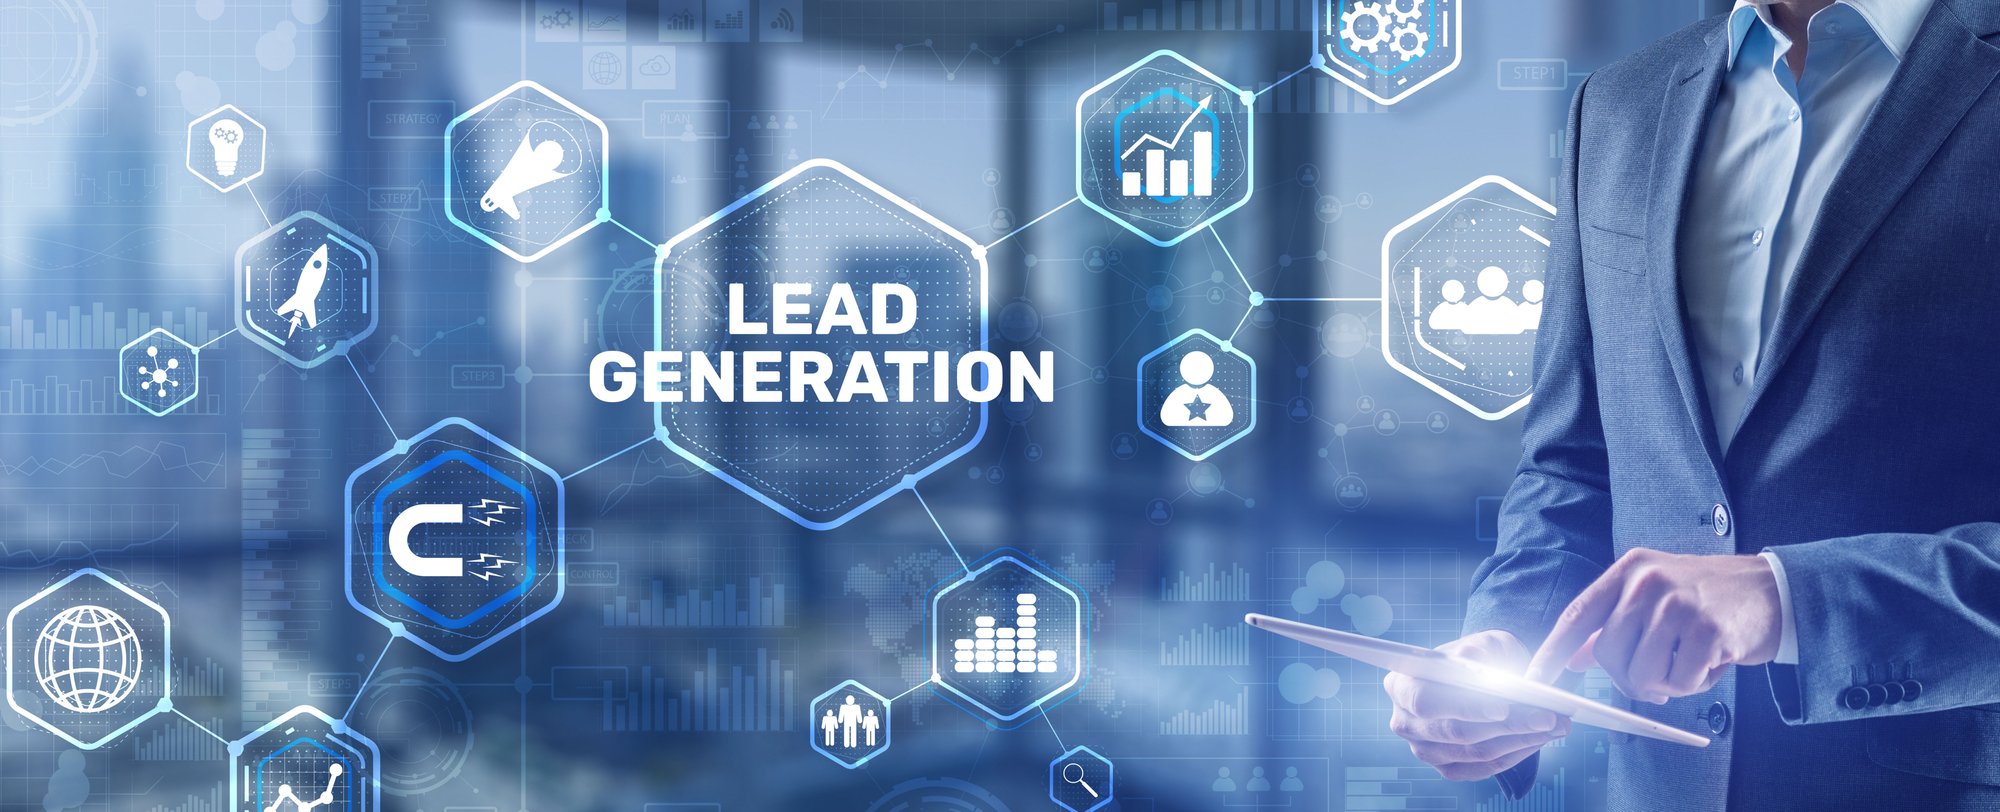 Leadgeneration